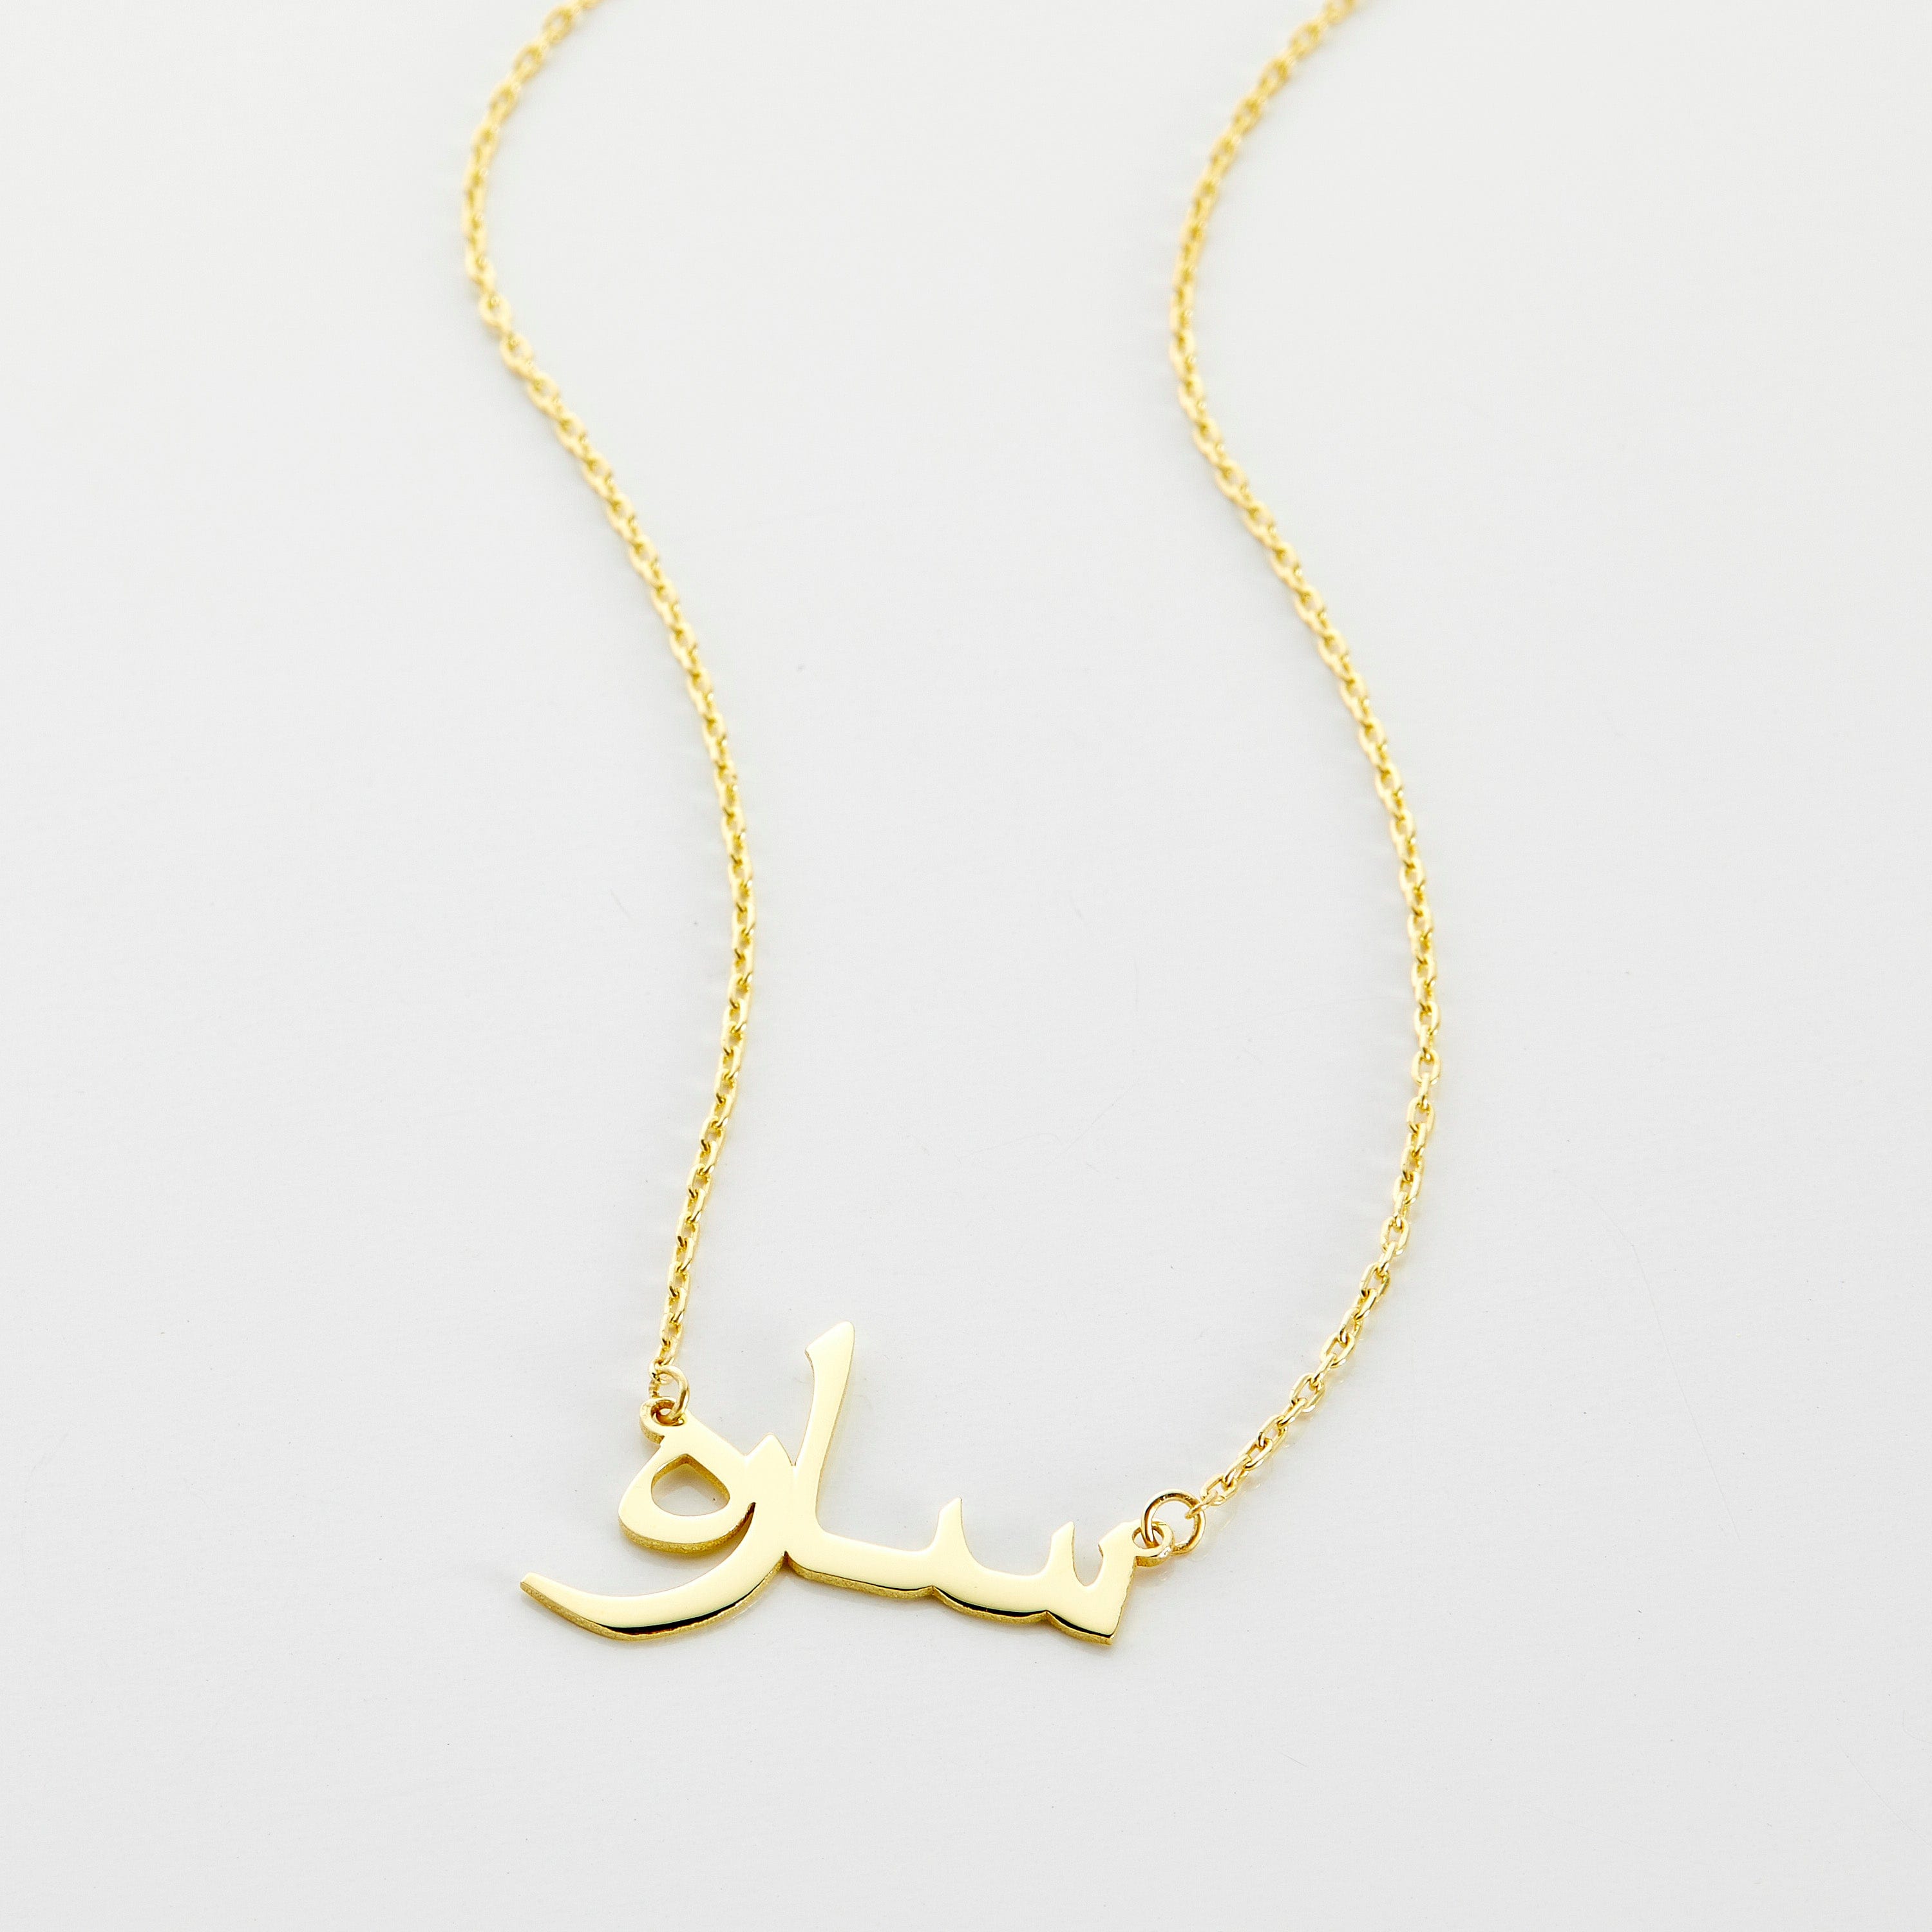 Custom Name Necklace - 14K Solid Gold - Nominal